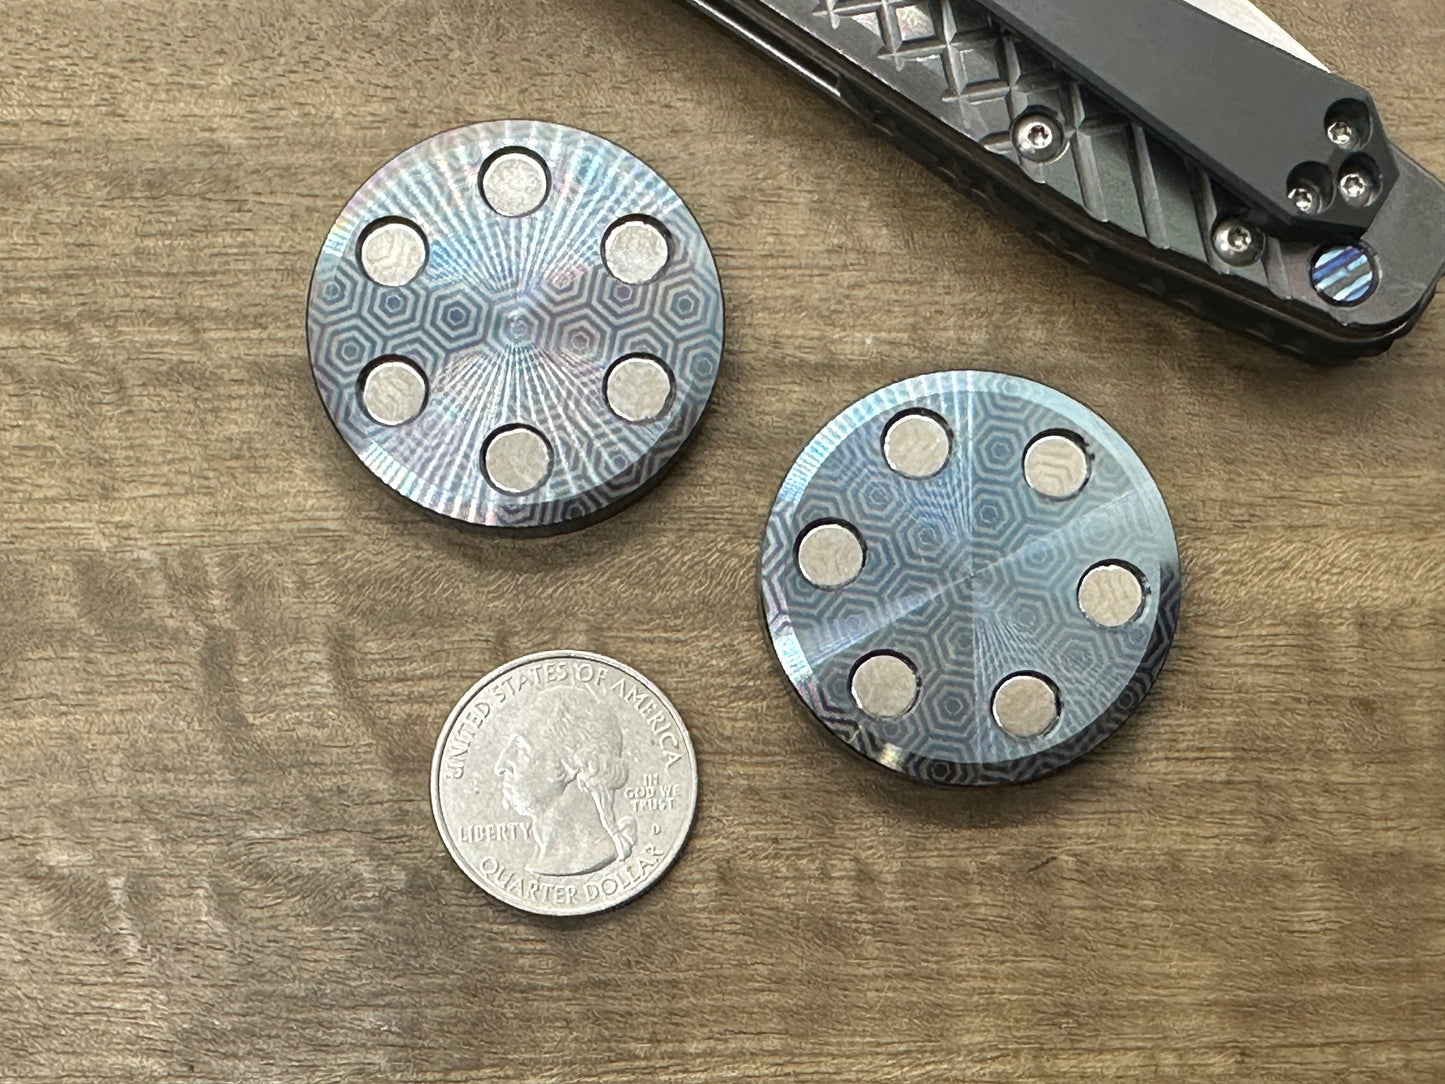 ORBITER Blue Flamed Stainless Steel Haptic Coins Fidget